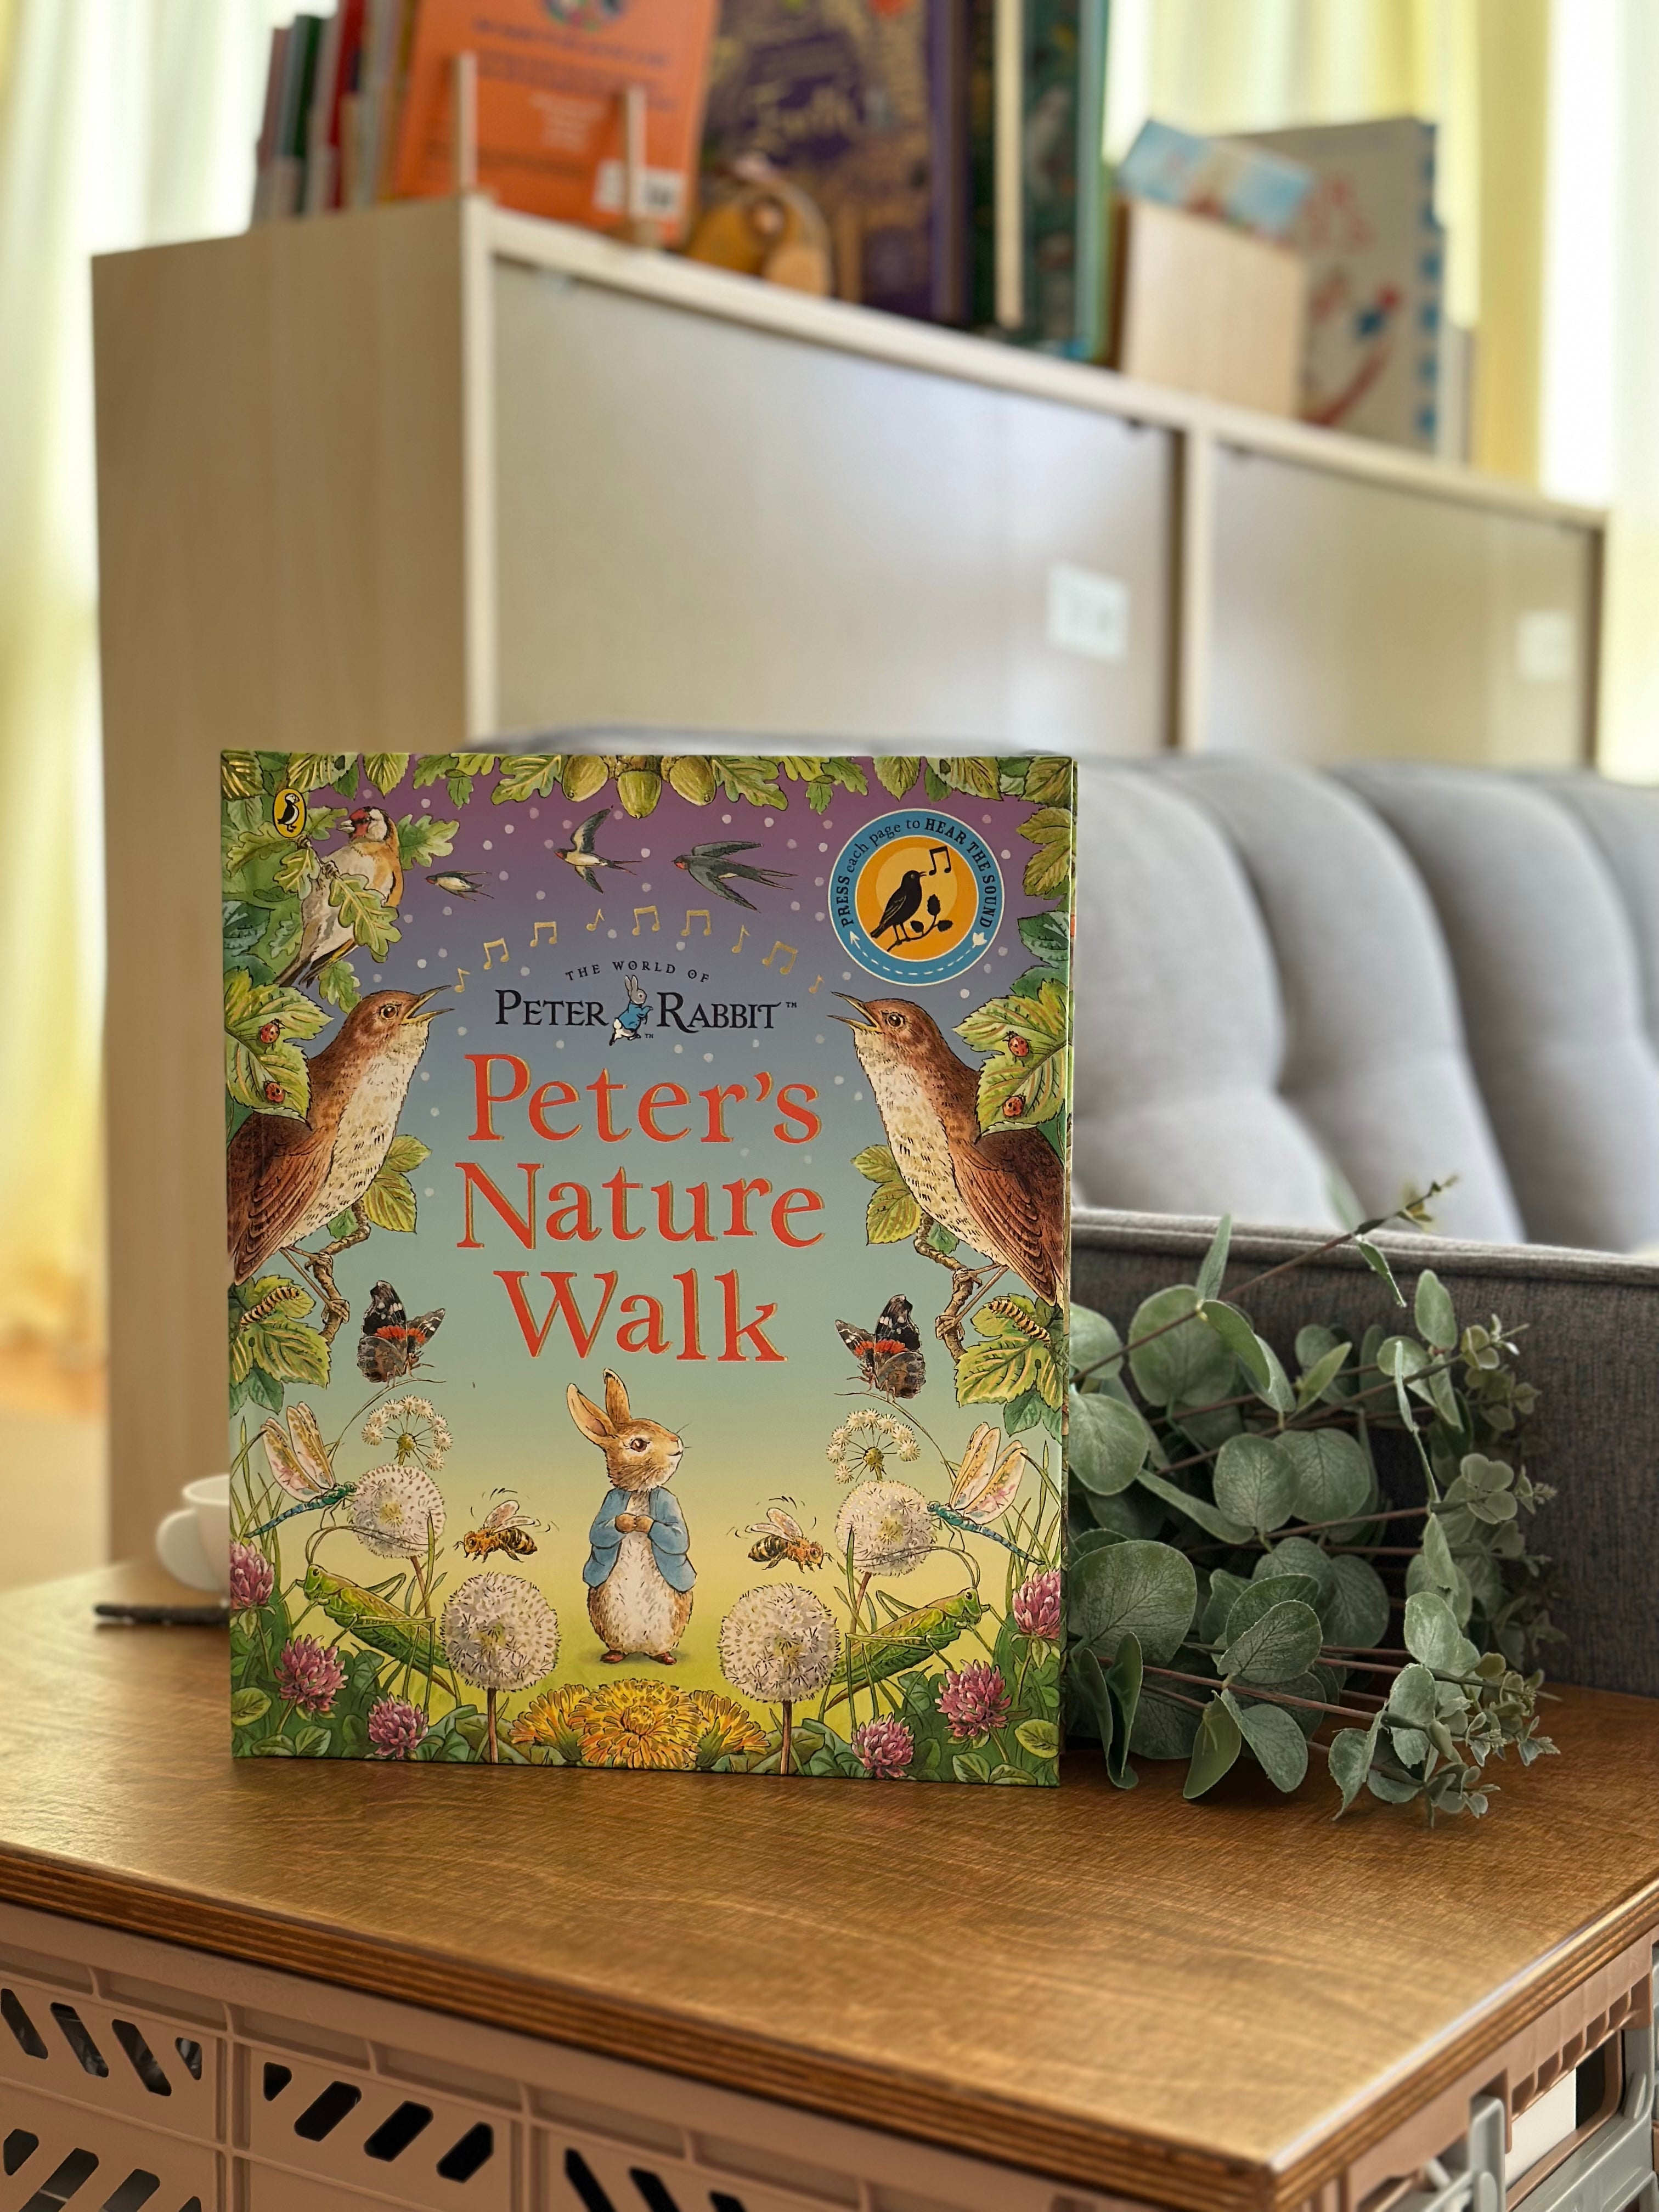 Peter Rabbit: Peter's Nature Walk (A Sound Book)